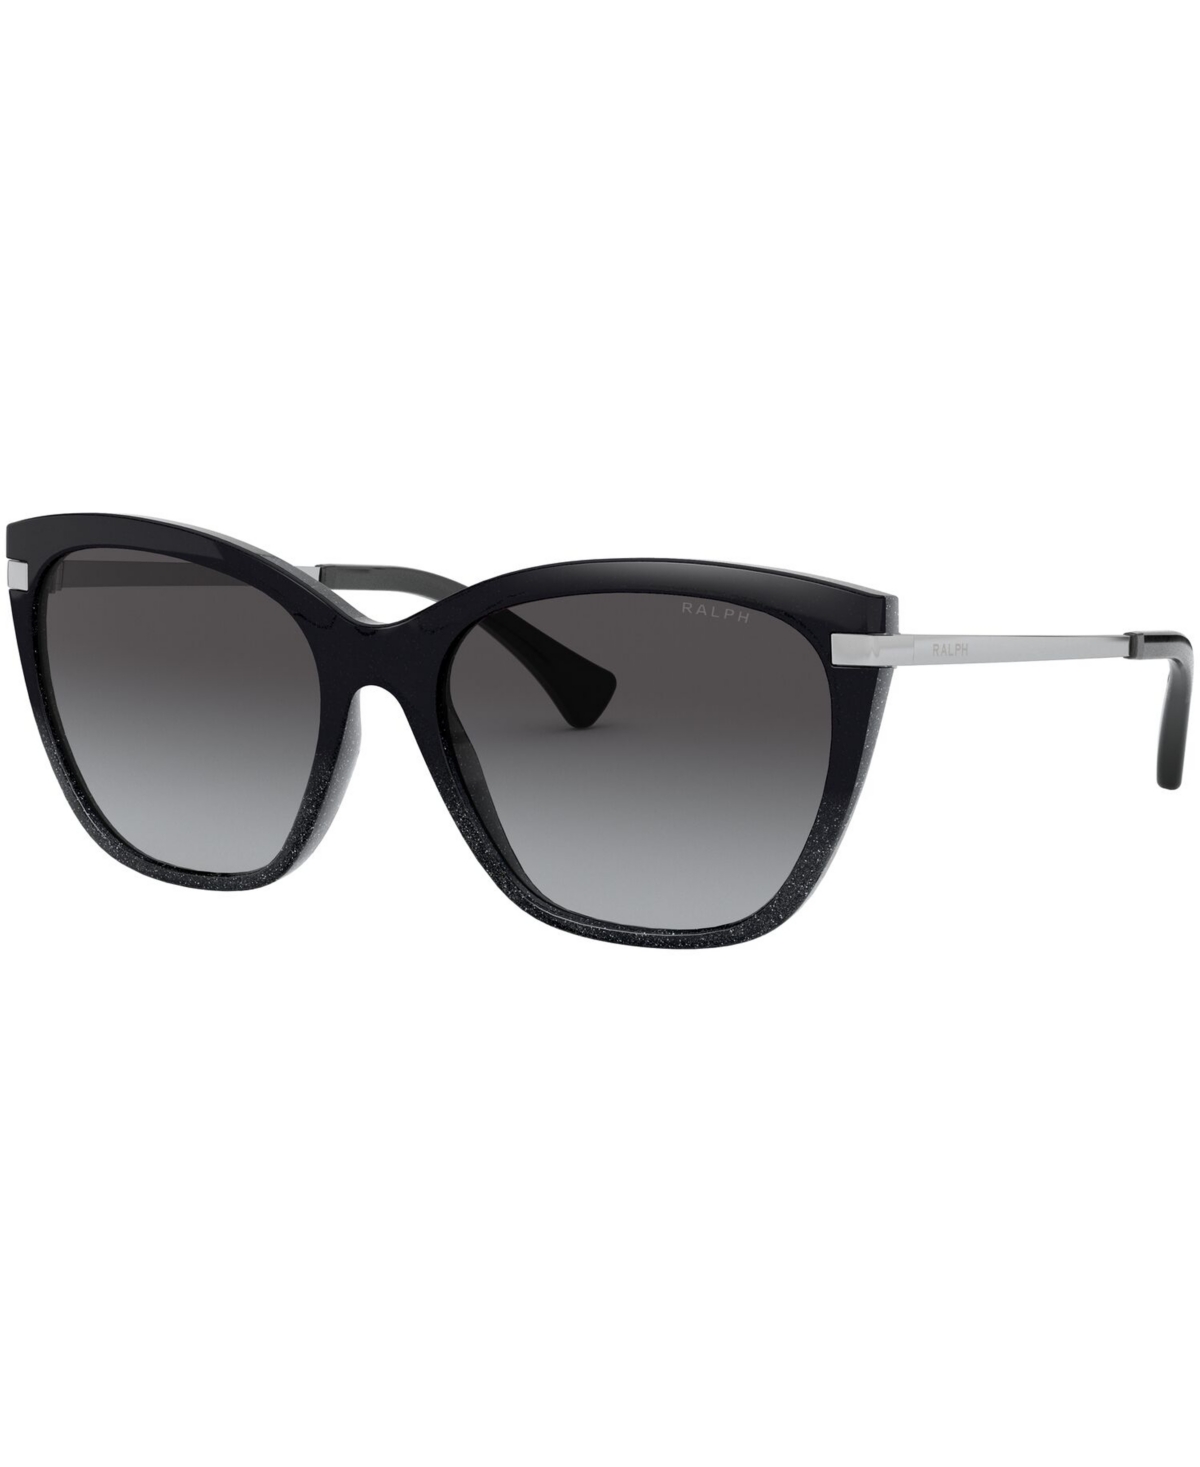 Ralph By Ralph Lauren Ralph Sunglasses, Ra5267 56 In Black Glitter,black Gradient,demo Lens